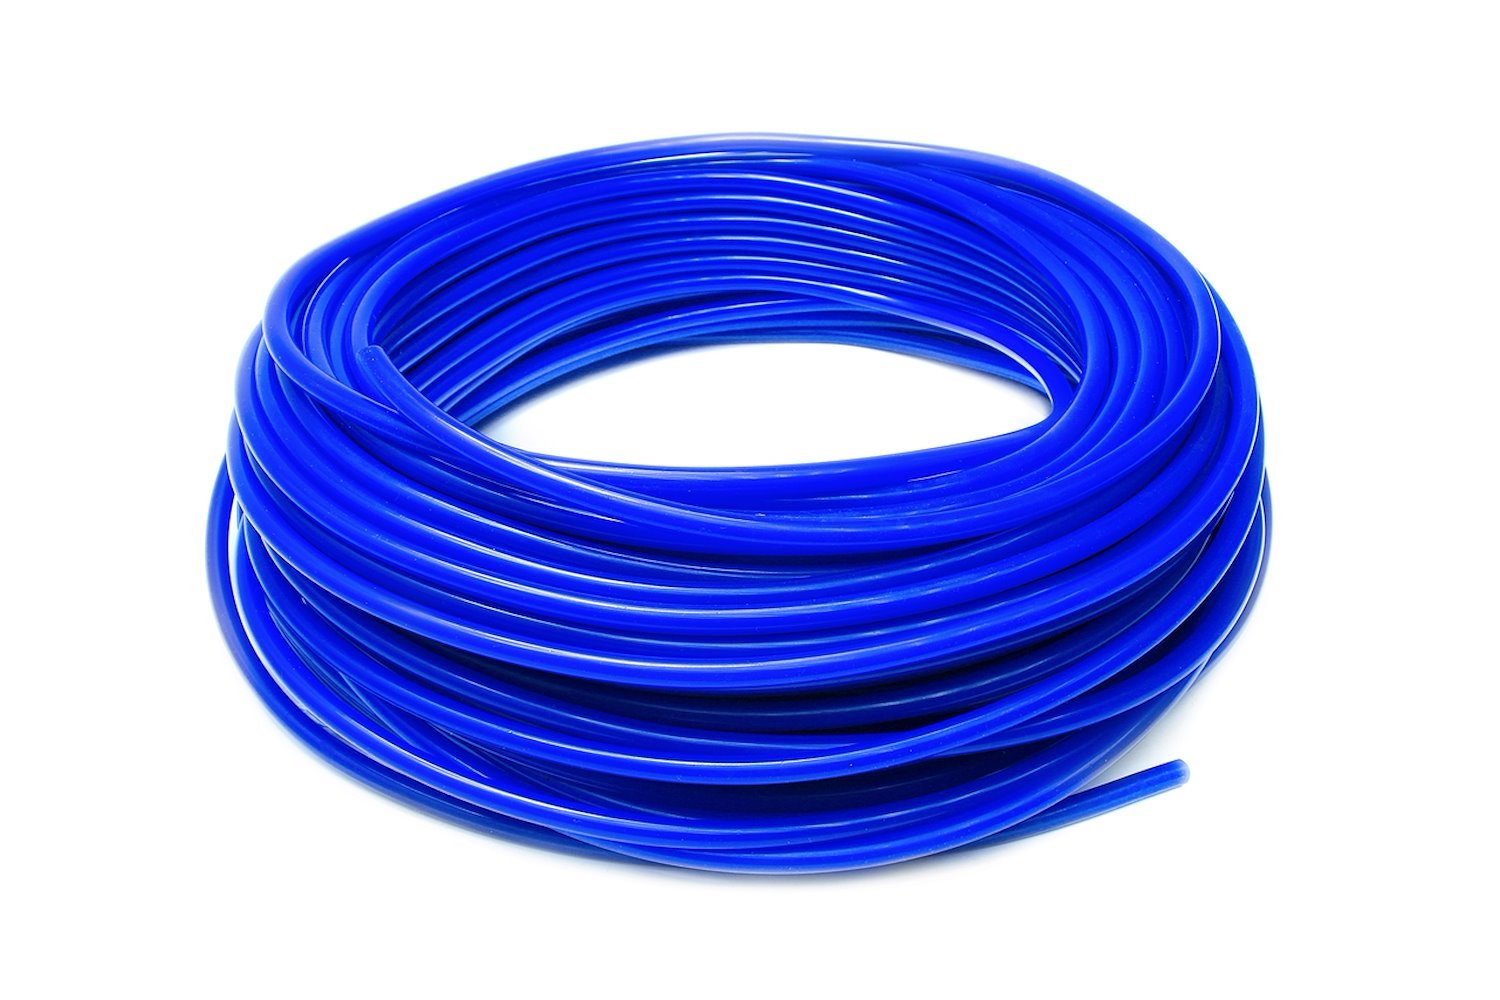 HTSVH95-BLUEx50 High-Temperature Silicone Vacuum Hose Tubing, 3/8 in. ID, 50 ft. Roll, Blue